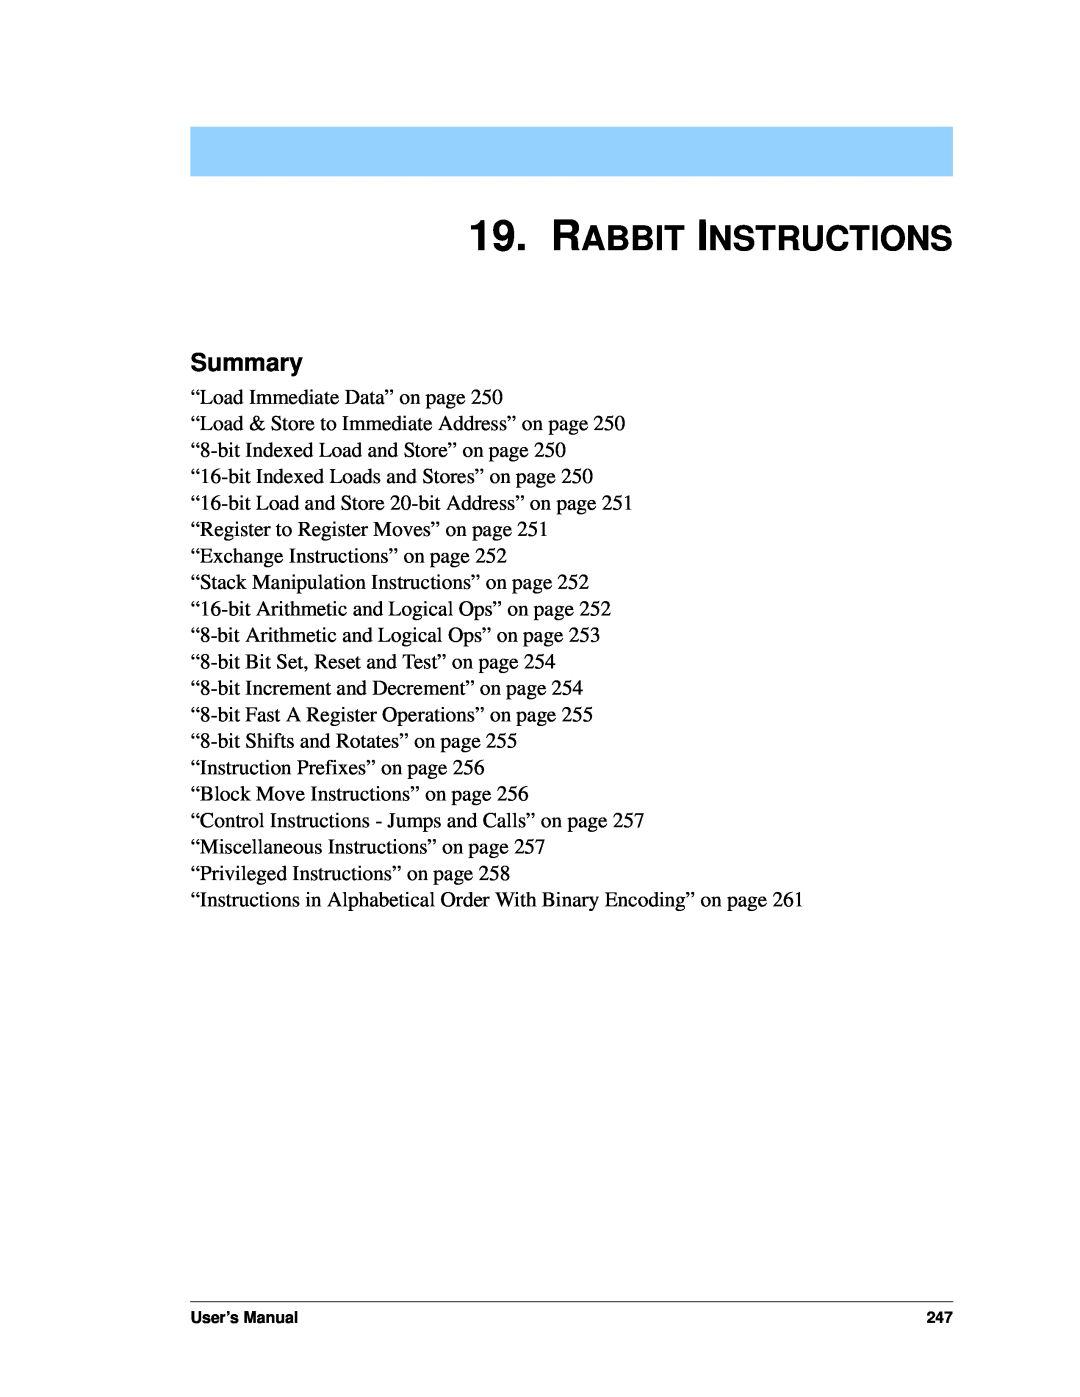 Jameco Electronics 3000, 2000 manual Rabbit Instructions, Summary 